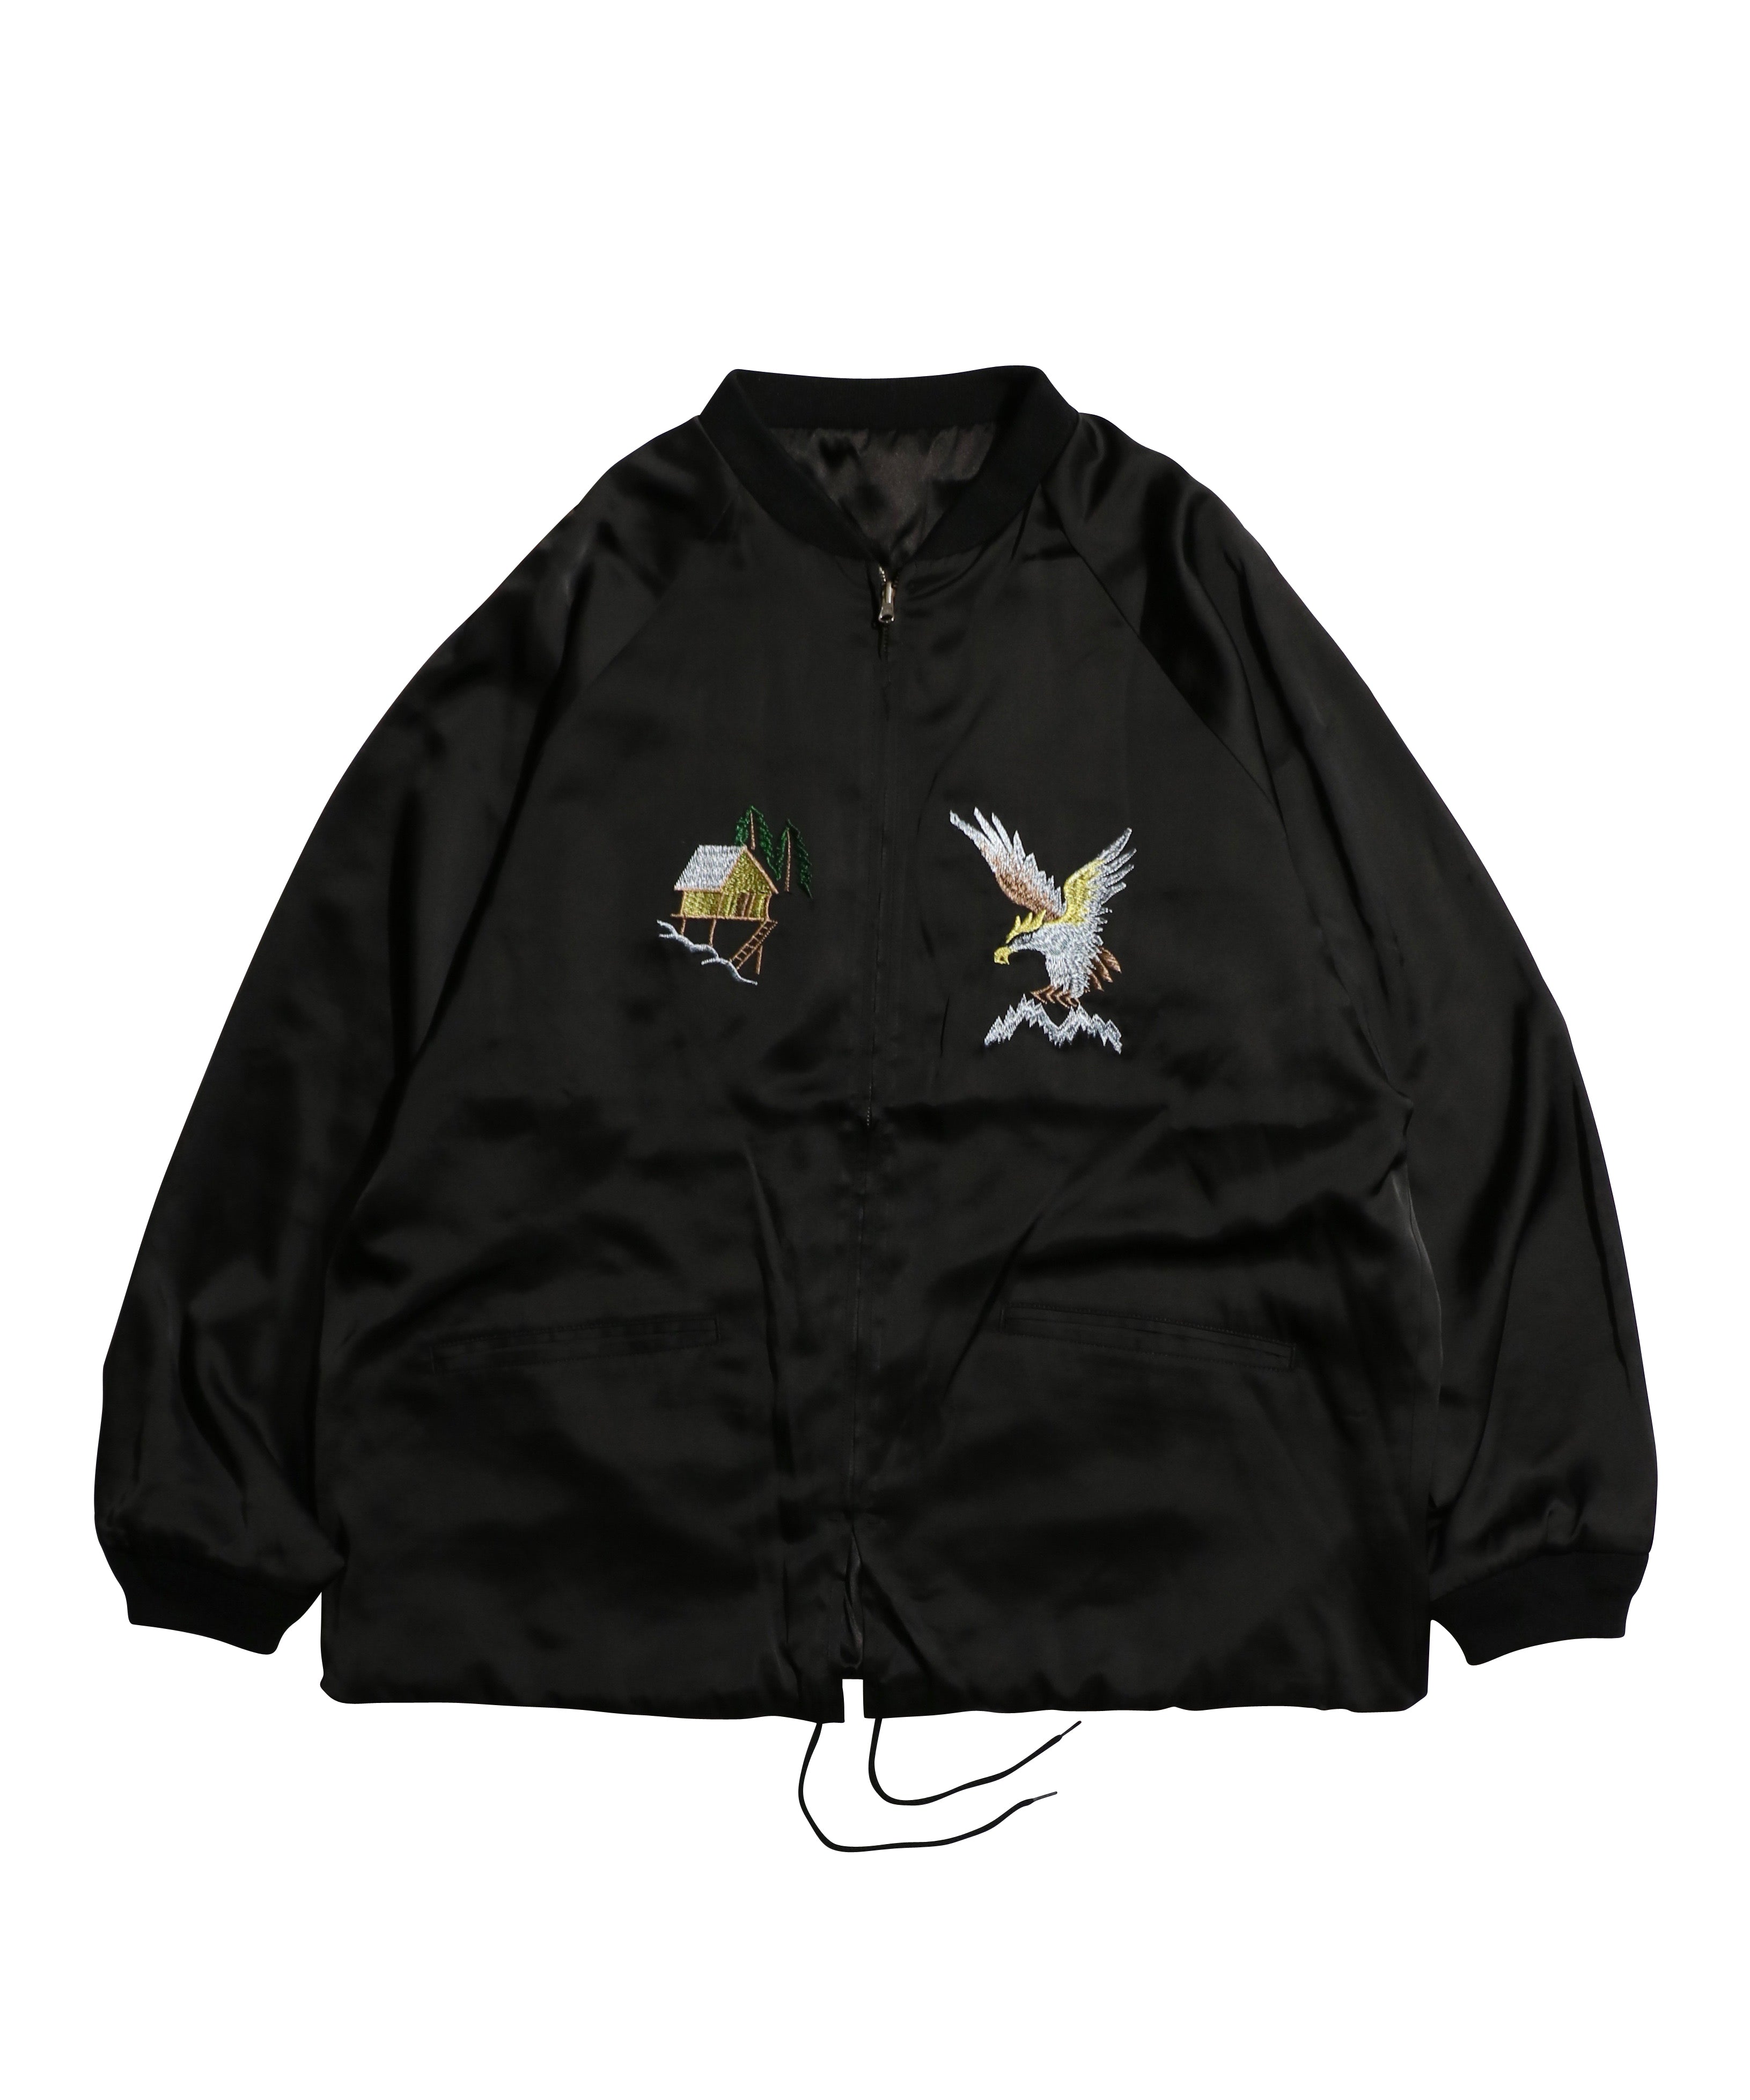 No:tl24s001 | Name:souver alaska jacket | Color:Black Sateen【THRIFTY LOOK_スリフティールック】